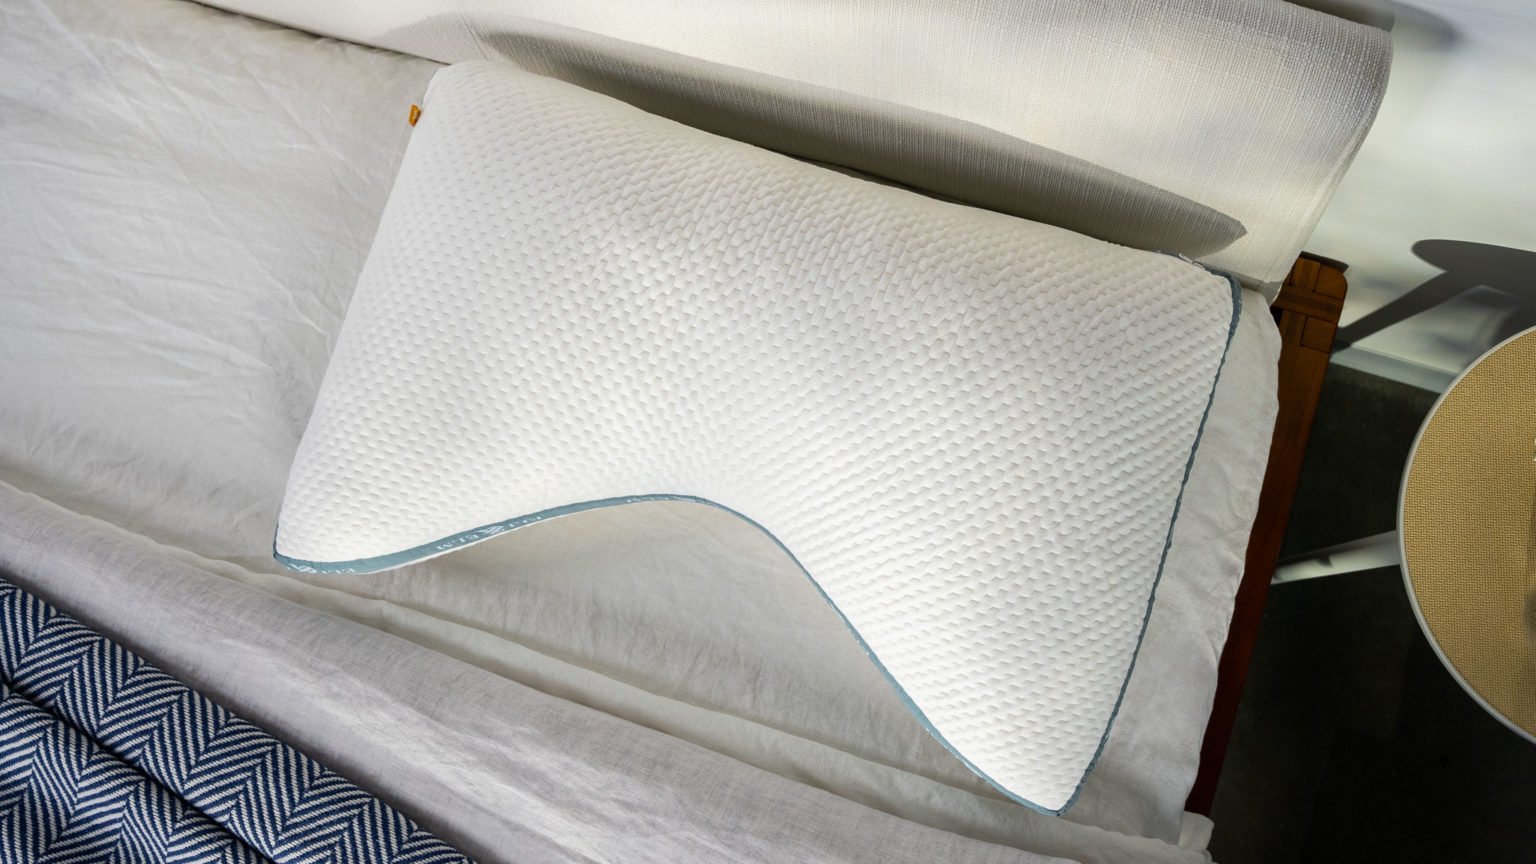 Cushion Lab Extra Dense Ergonomic Cervical Pillow for Firm Neck